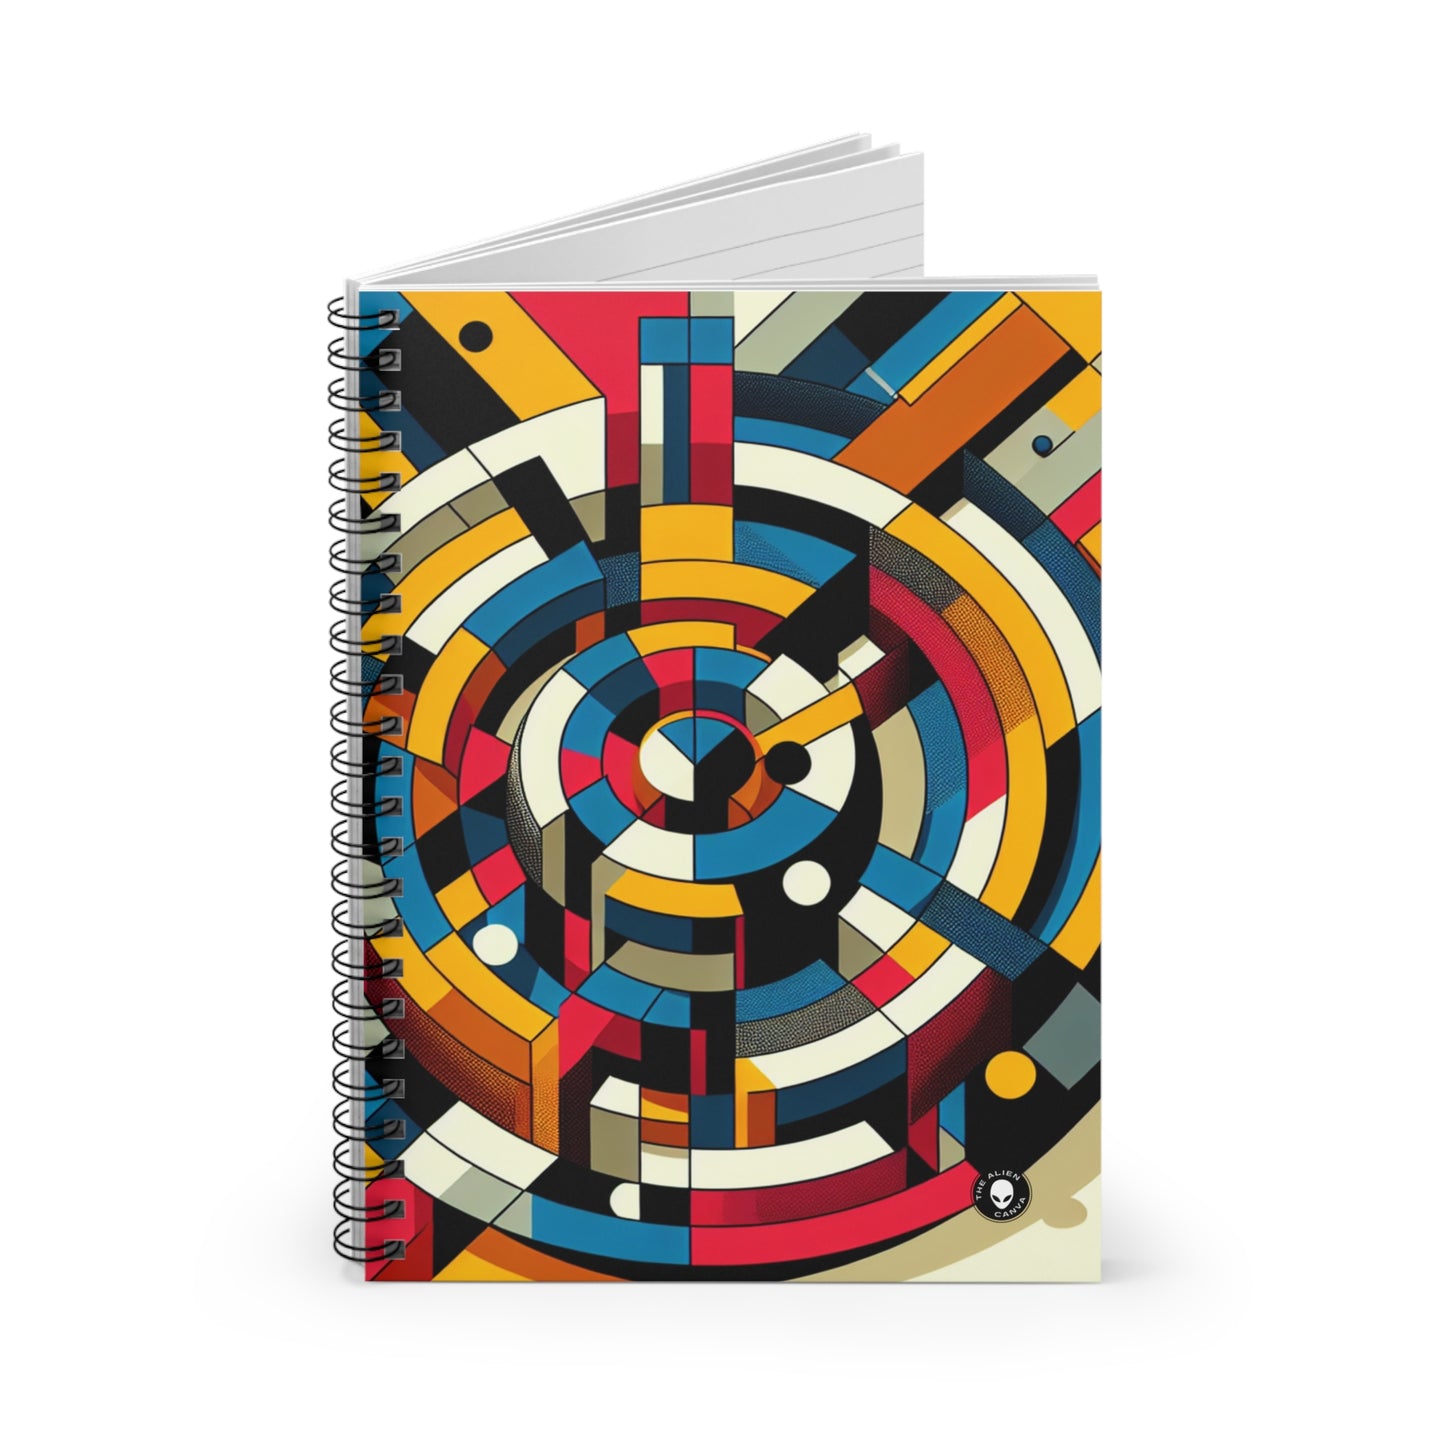 "Digital Revolution: A Constructivist Perspective" - The Alien Spiral Notebook (Ruled Line) Constructivism